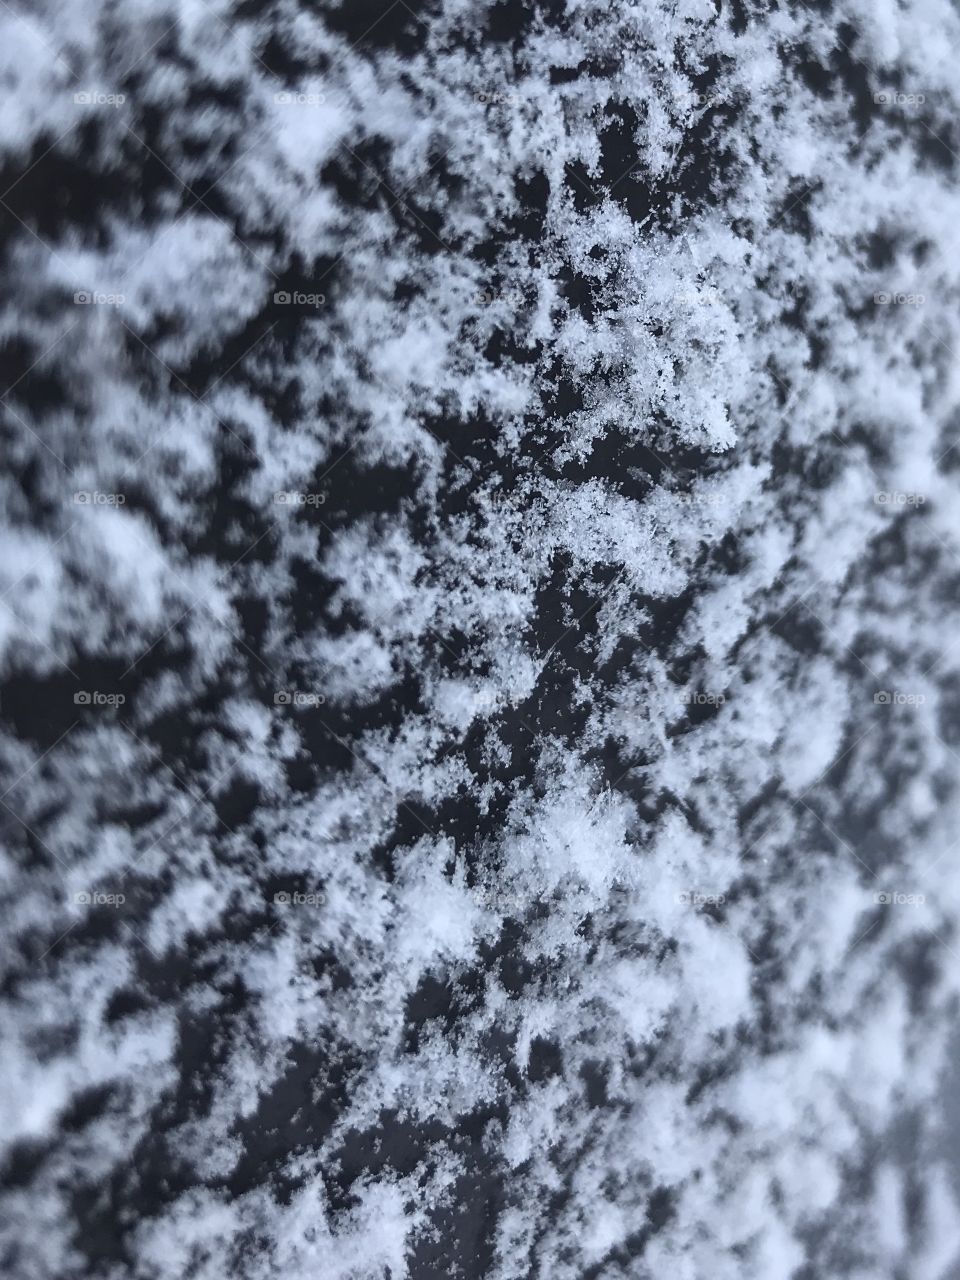 Snowflakes on a car 